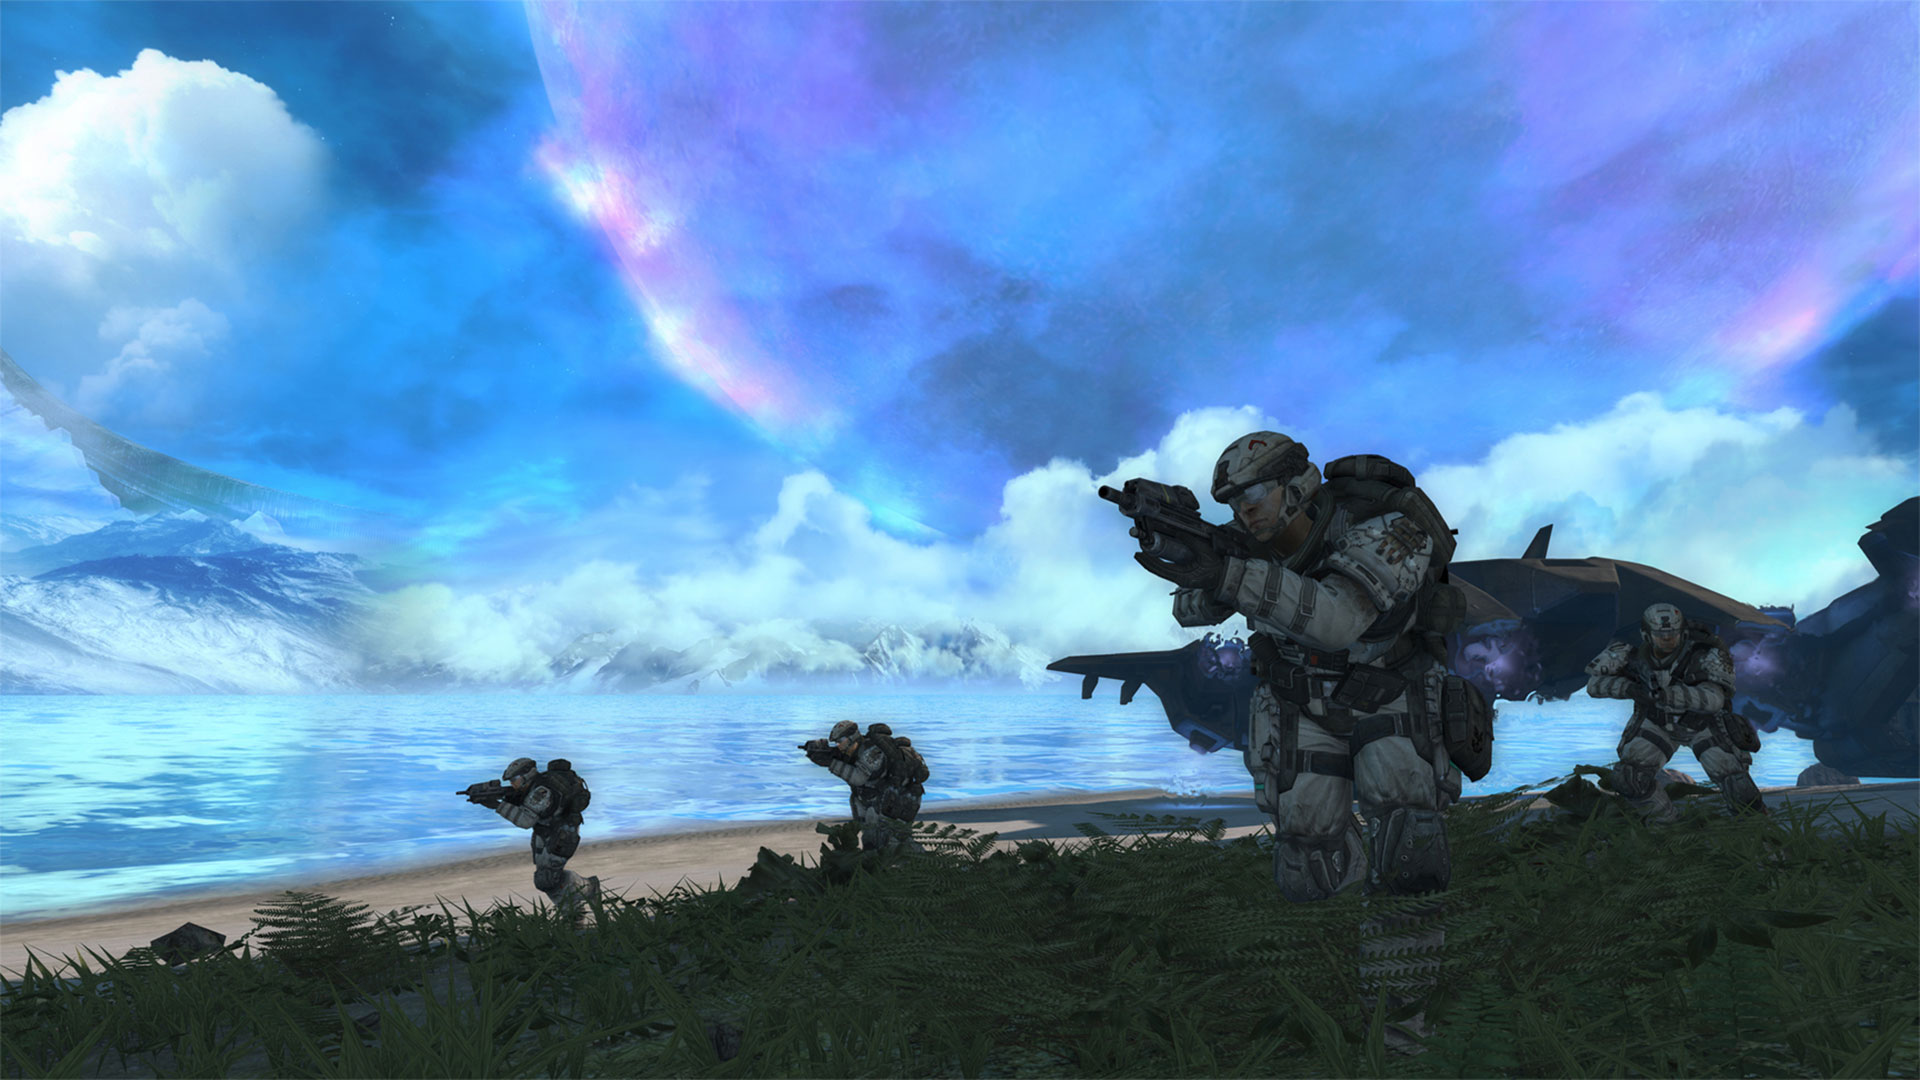 Halo: Combat Evolved Anniversary begins beta testing on PC next month -  Polygon